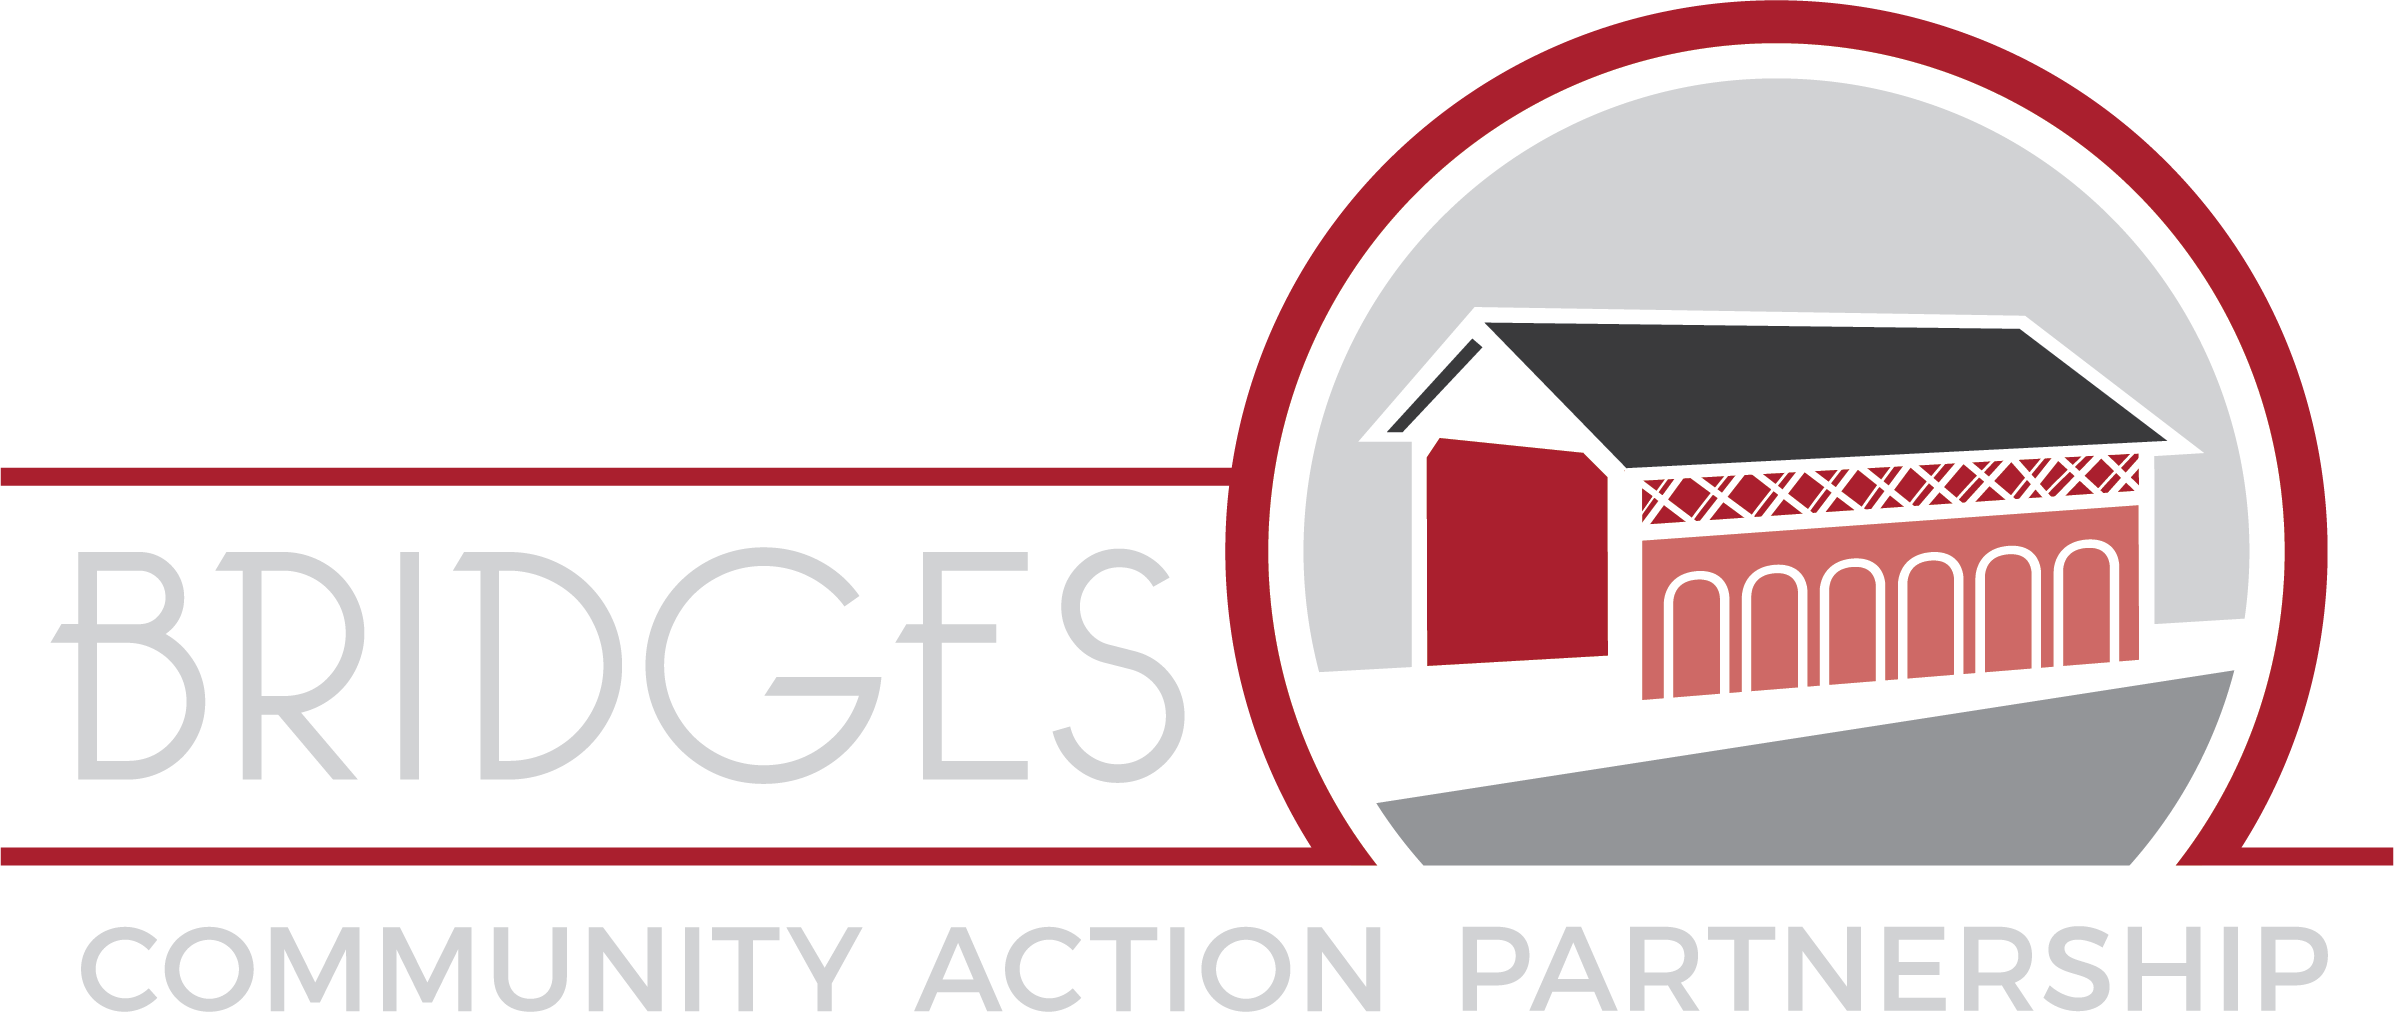 Bridges Community Action Partnership